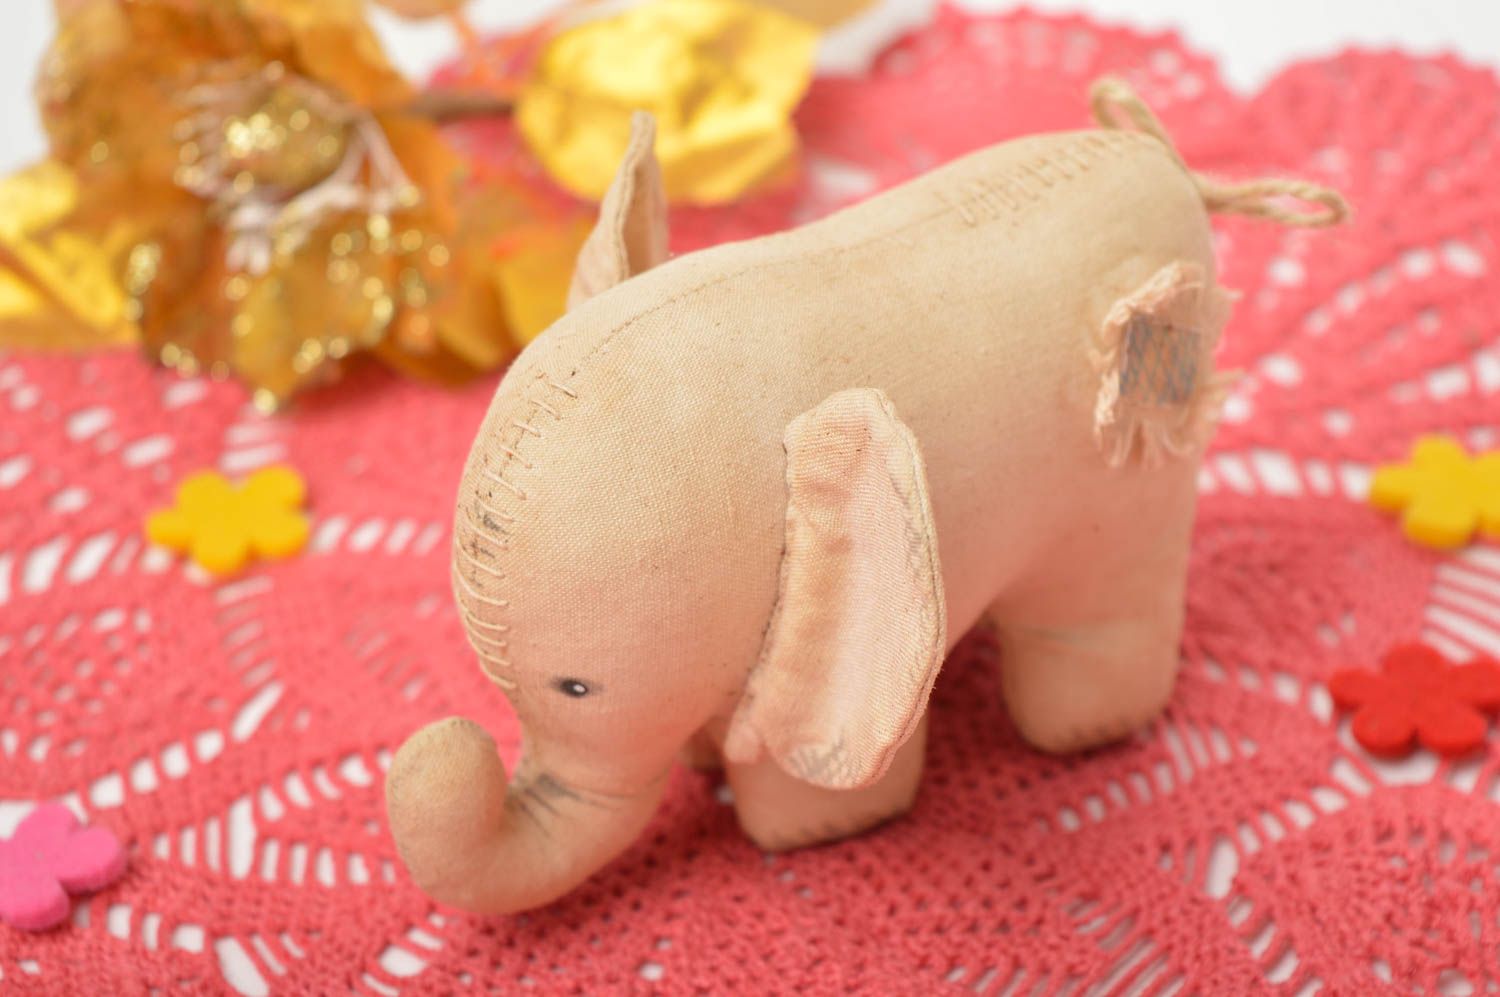 Handmade cute soft toy elephant stuffed toy for children home decor ideas photo 1